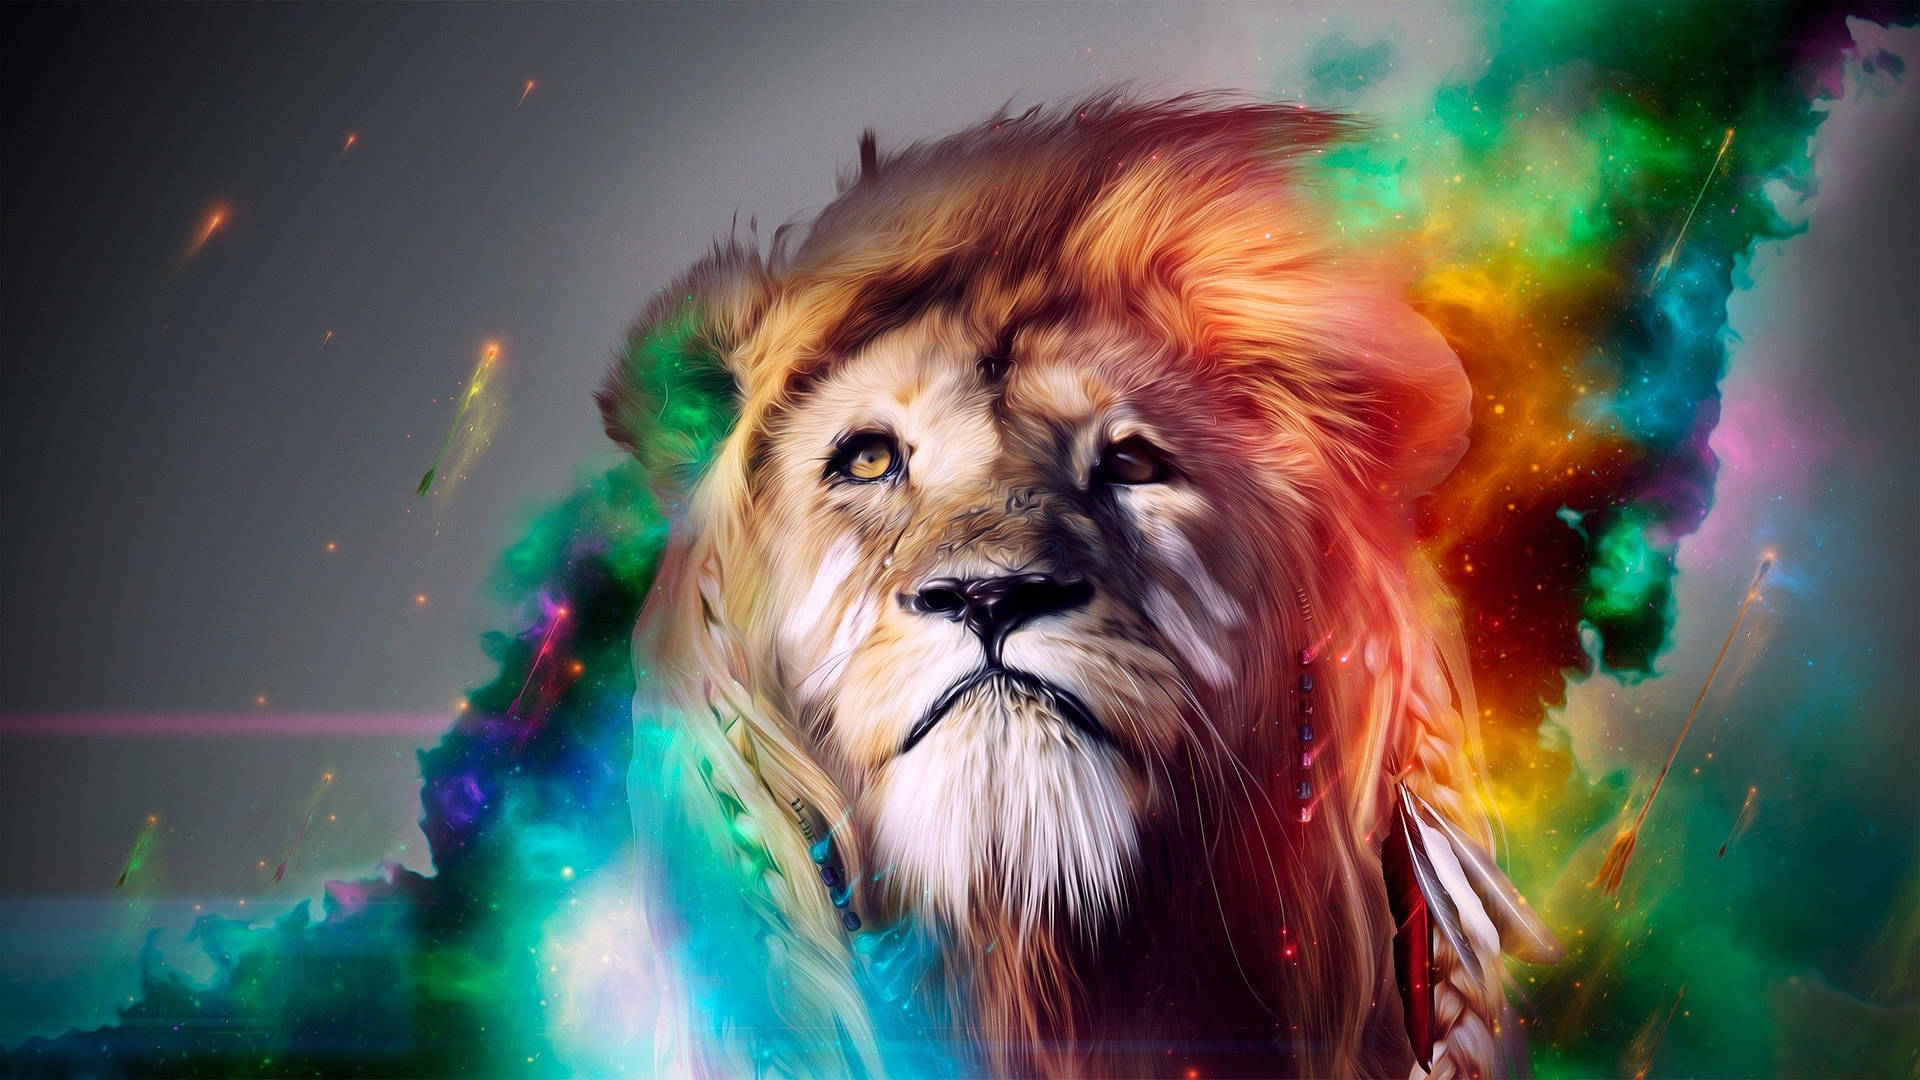 43+] 3D Wallpaper Desktop Backgrounds Lion - WallpaperSafari